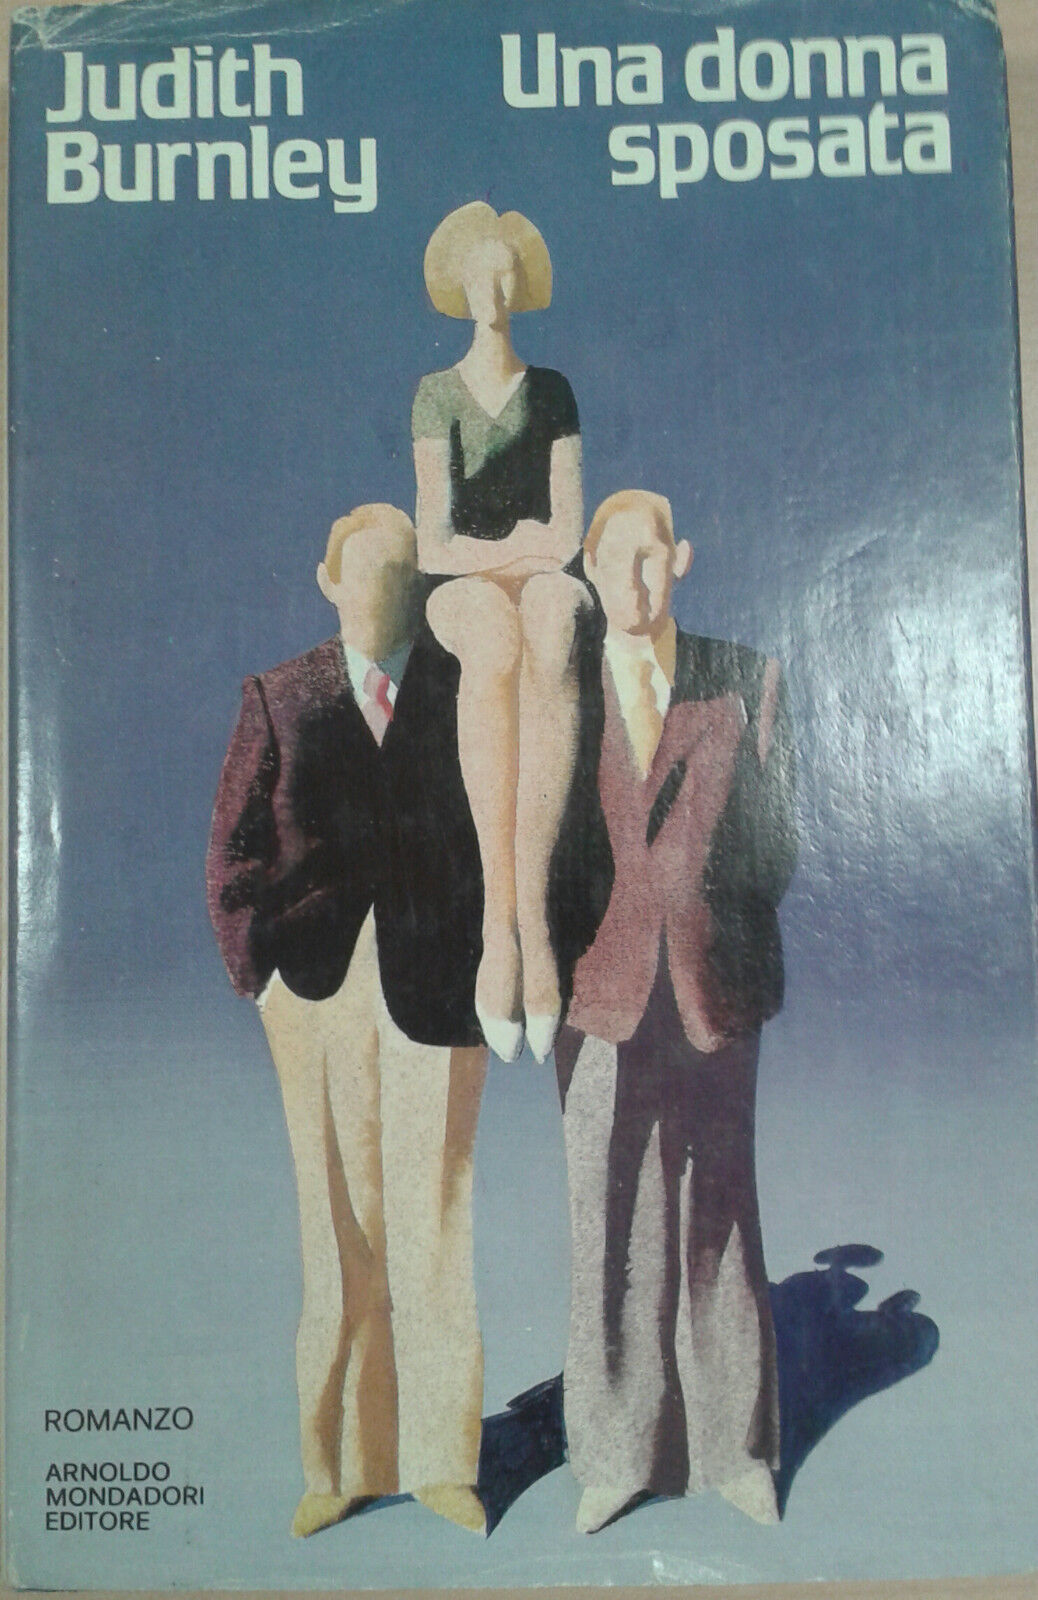 UNA DONNA SPOSATA - Judith Burnley - Mondadori - 1977 - M